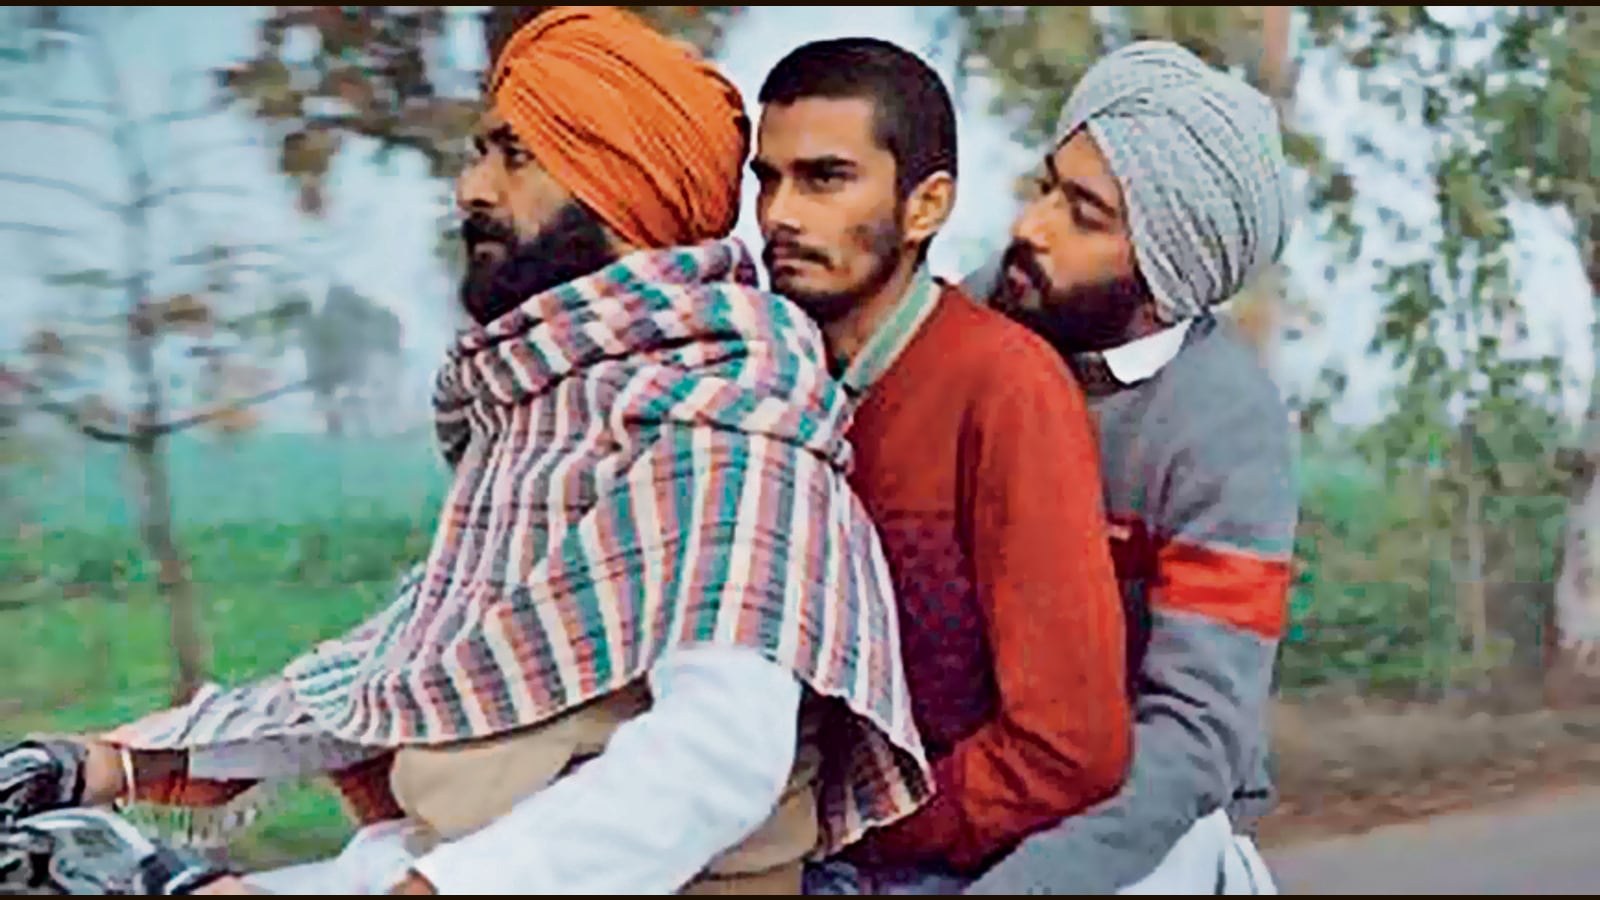 Jaggi A Punjabi film lifts the veil on sexual violence against